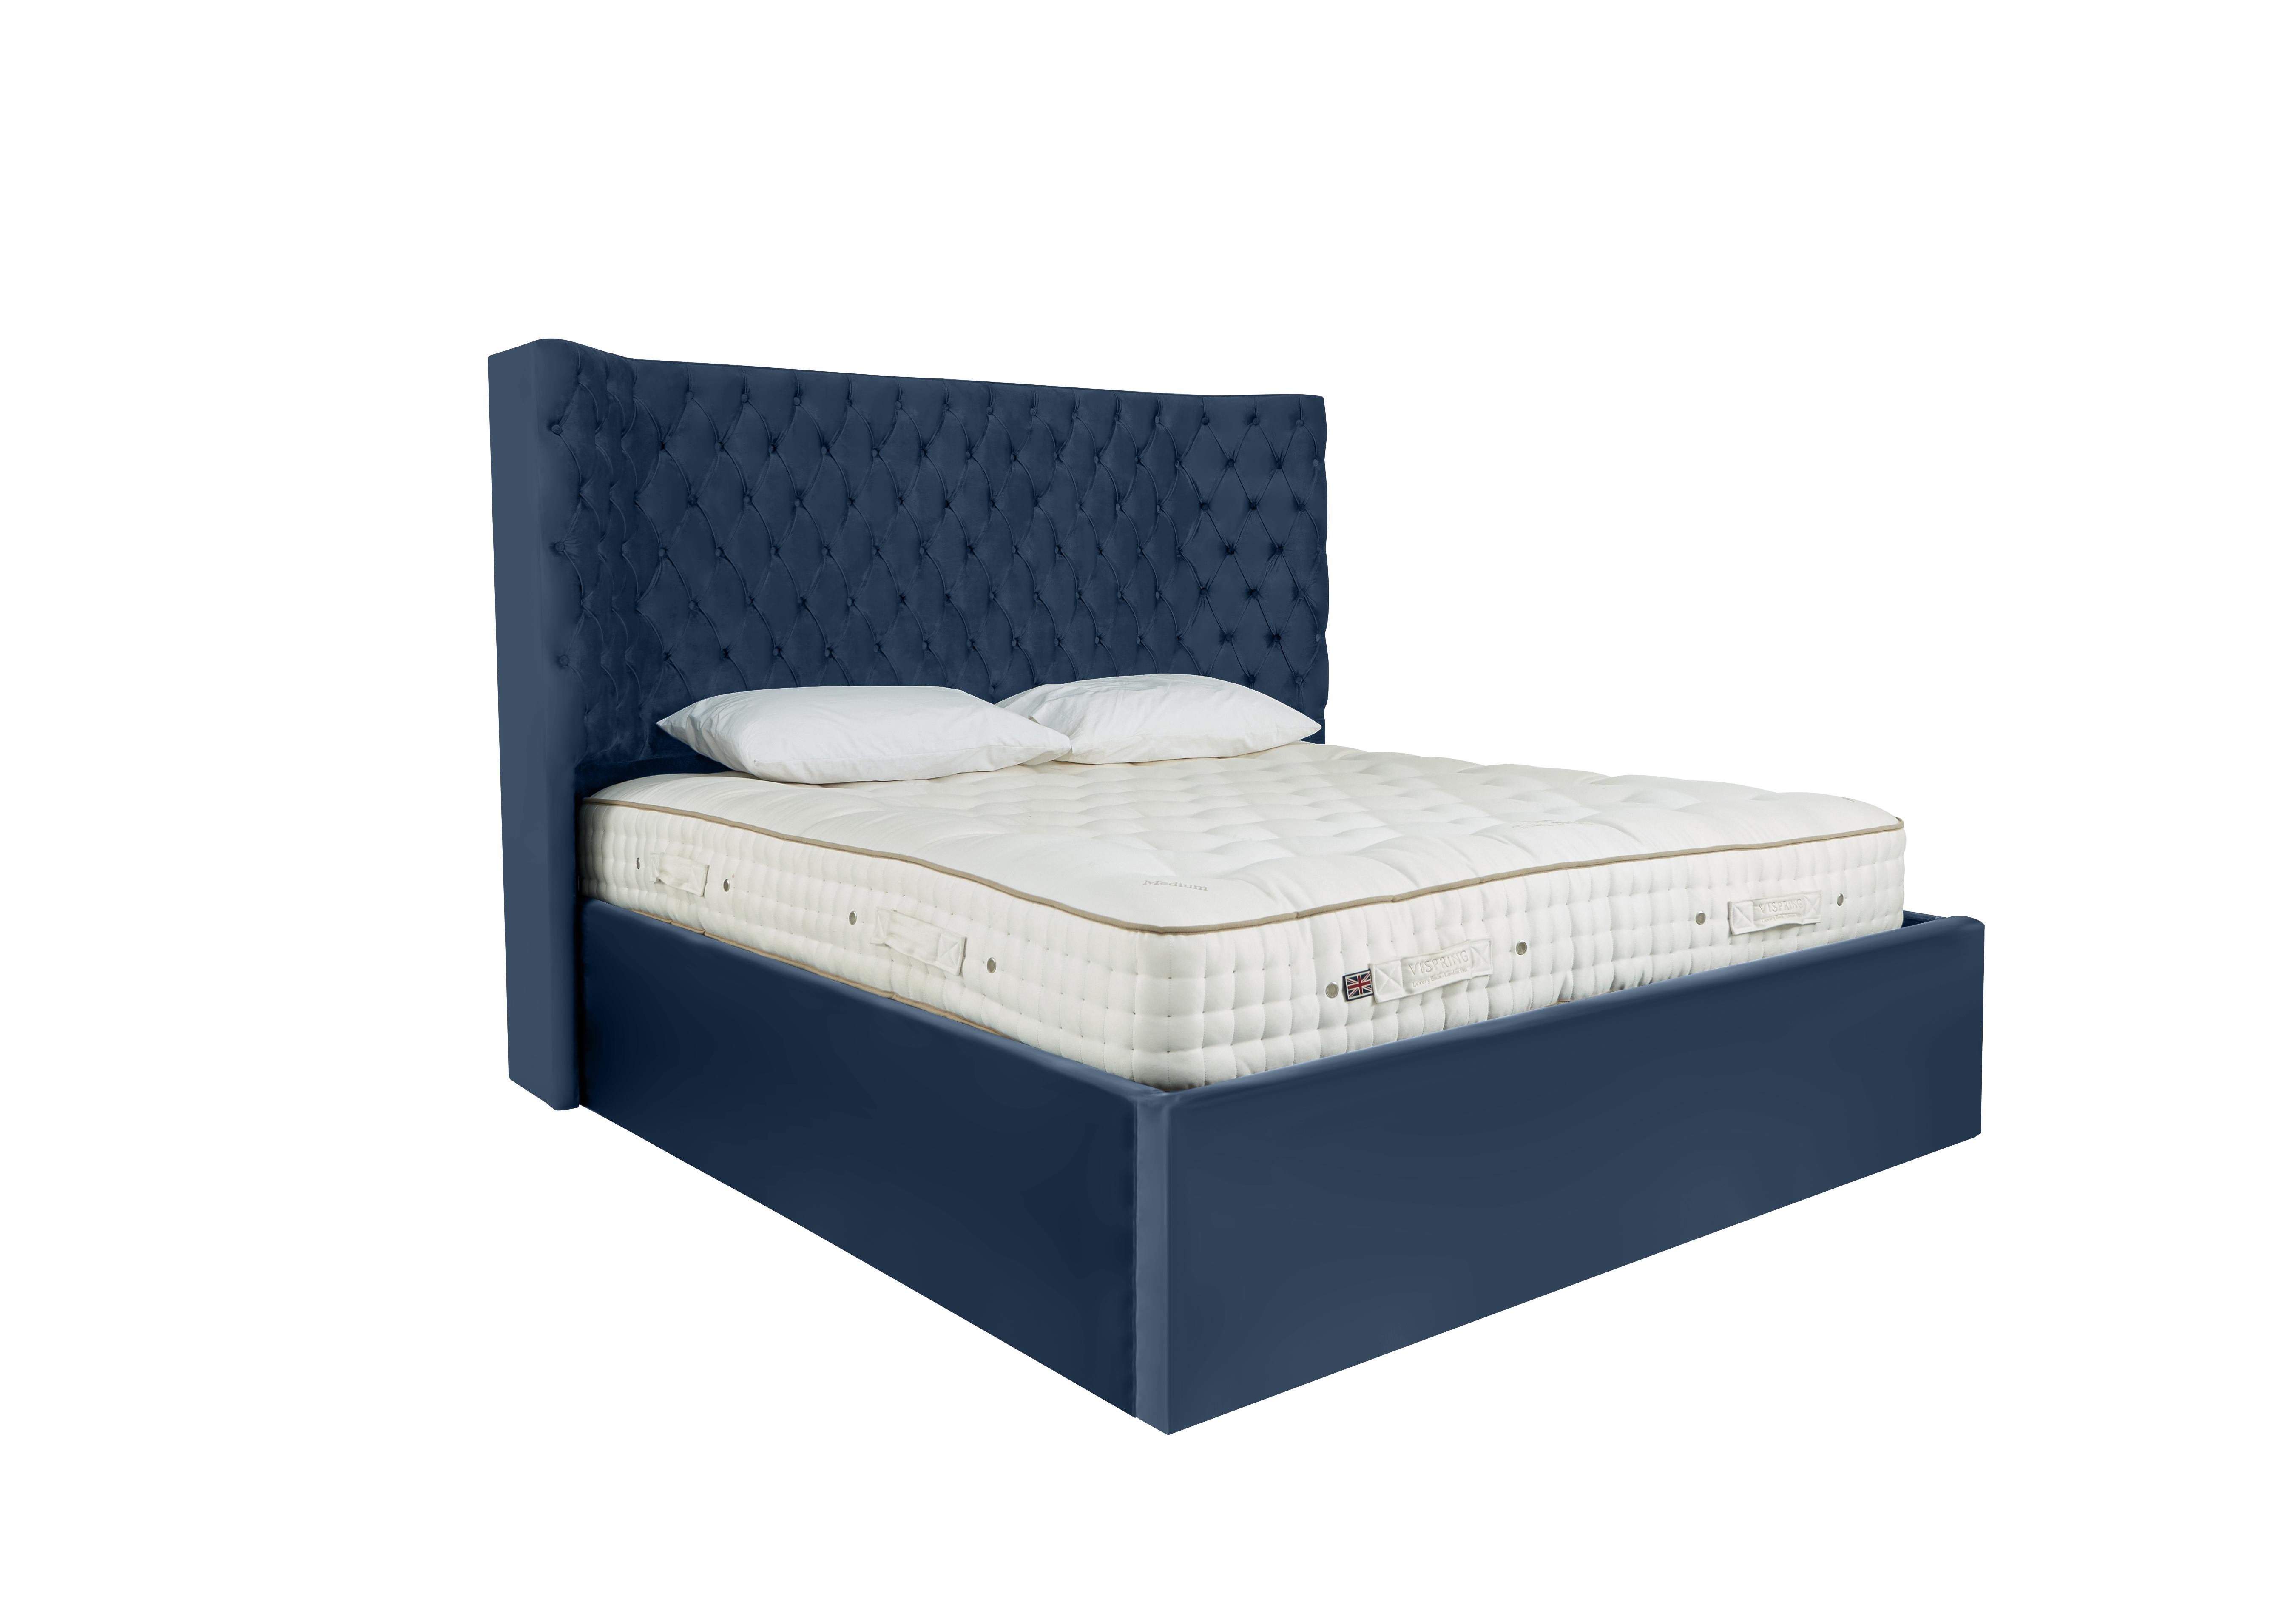 Maximus Ottoman Bed Frame in Velvet Navy on Furniture Village